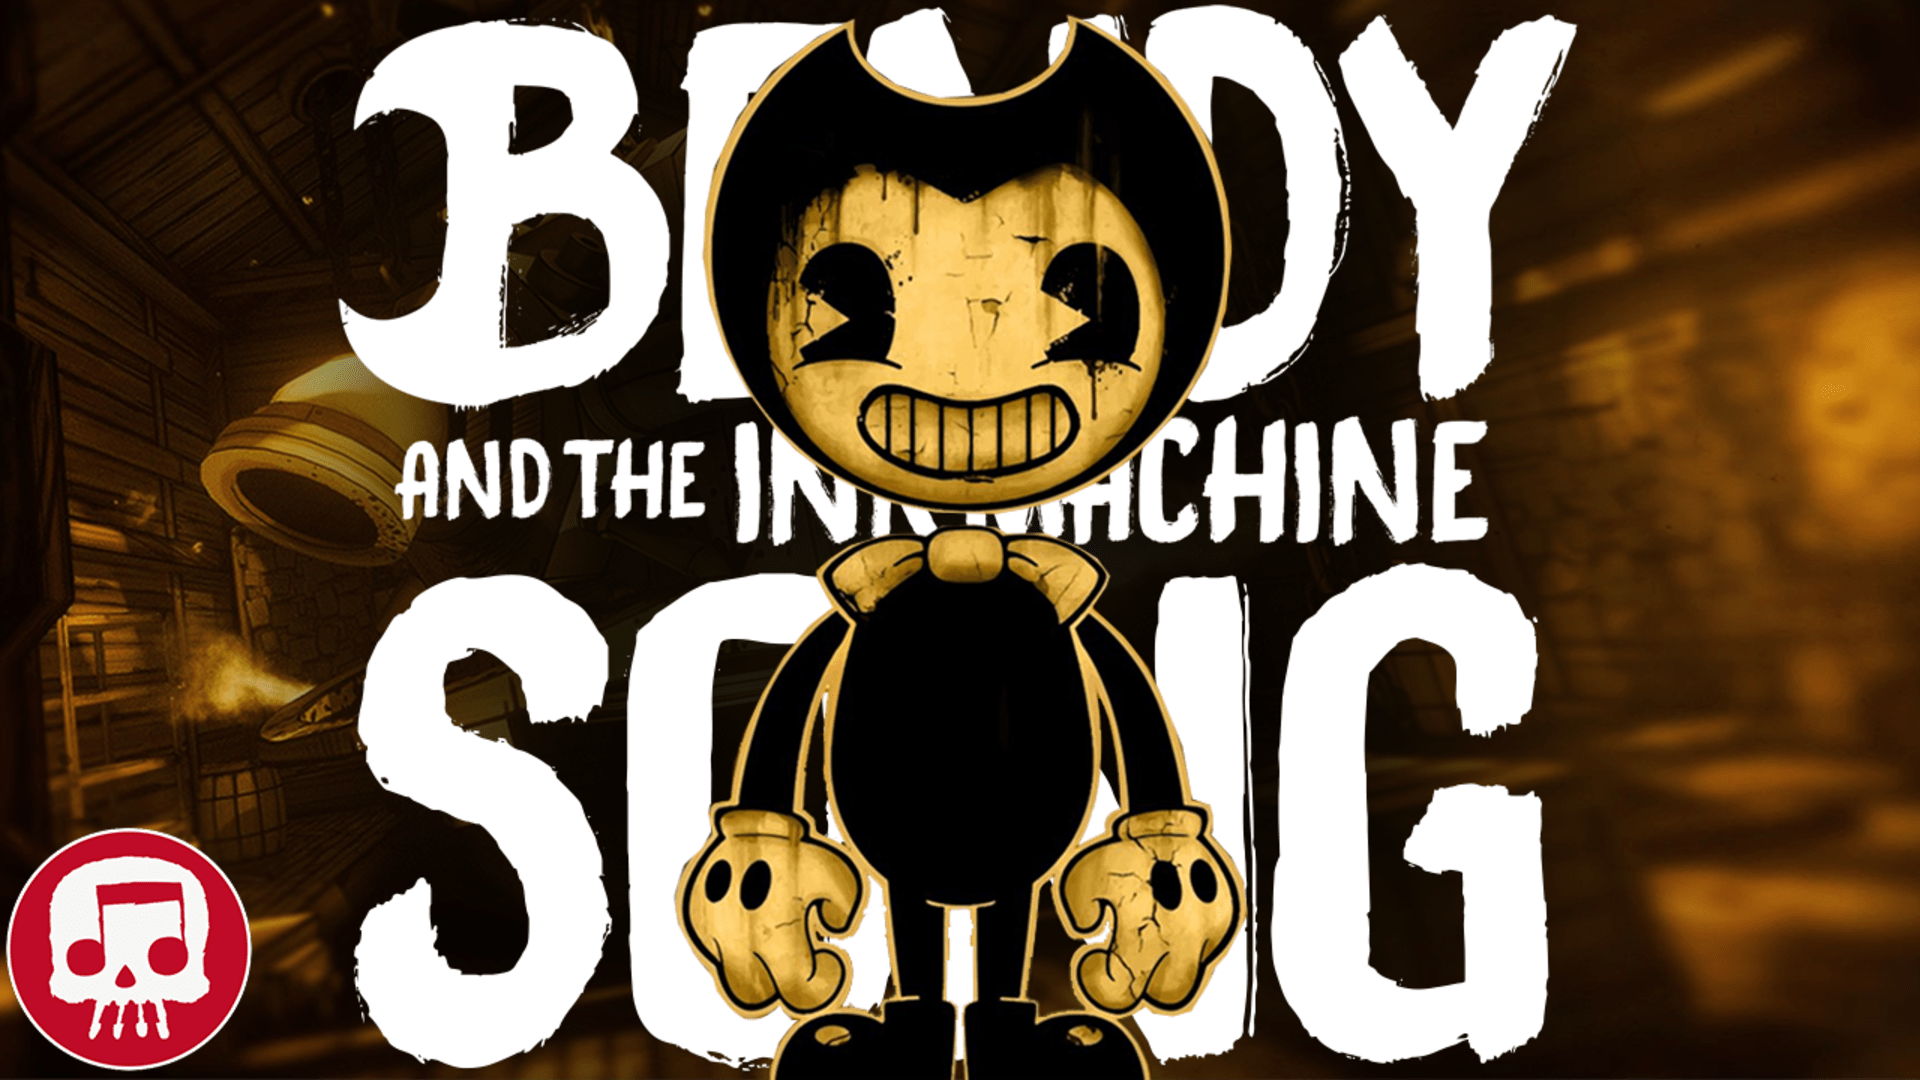 About: Bendy Ink Machine Songs & Lyrics (Google Play version)